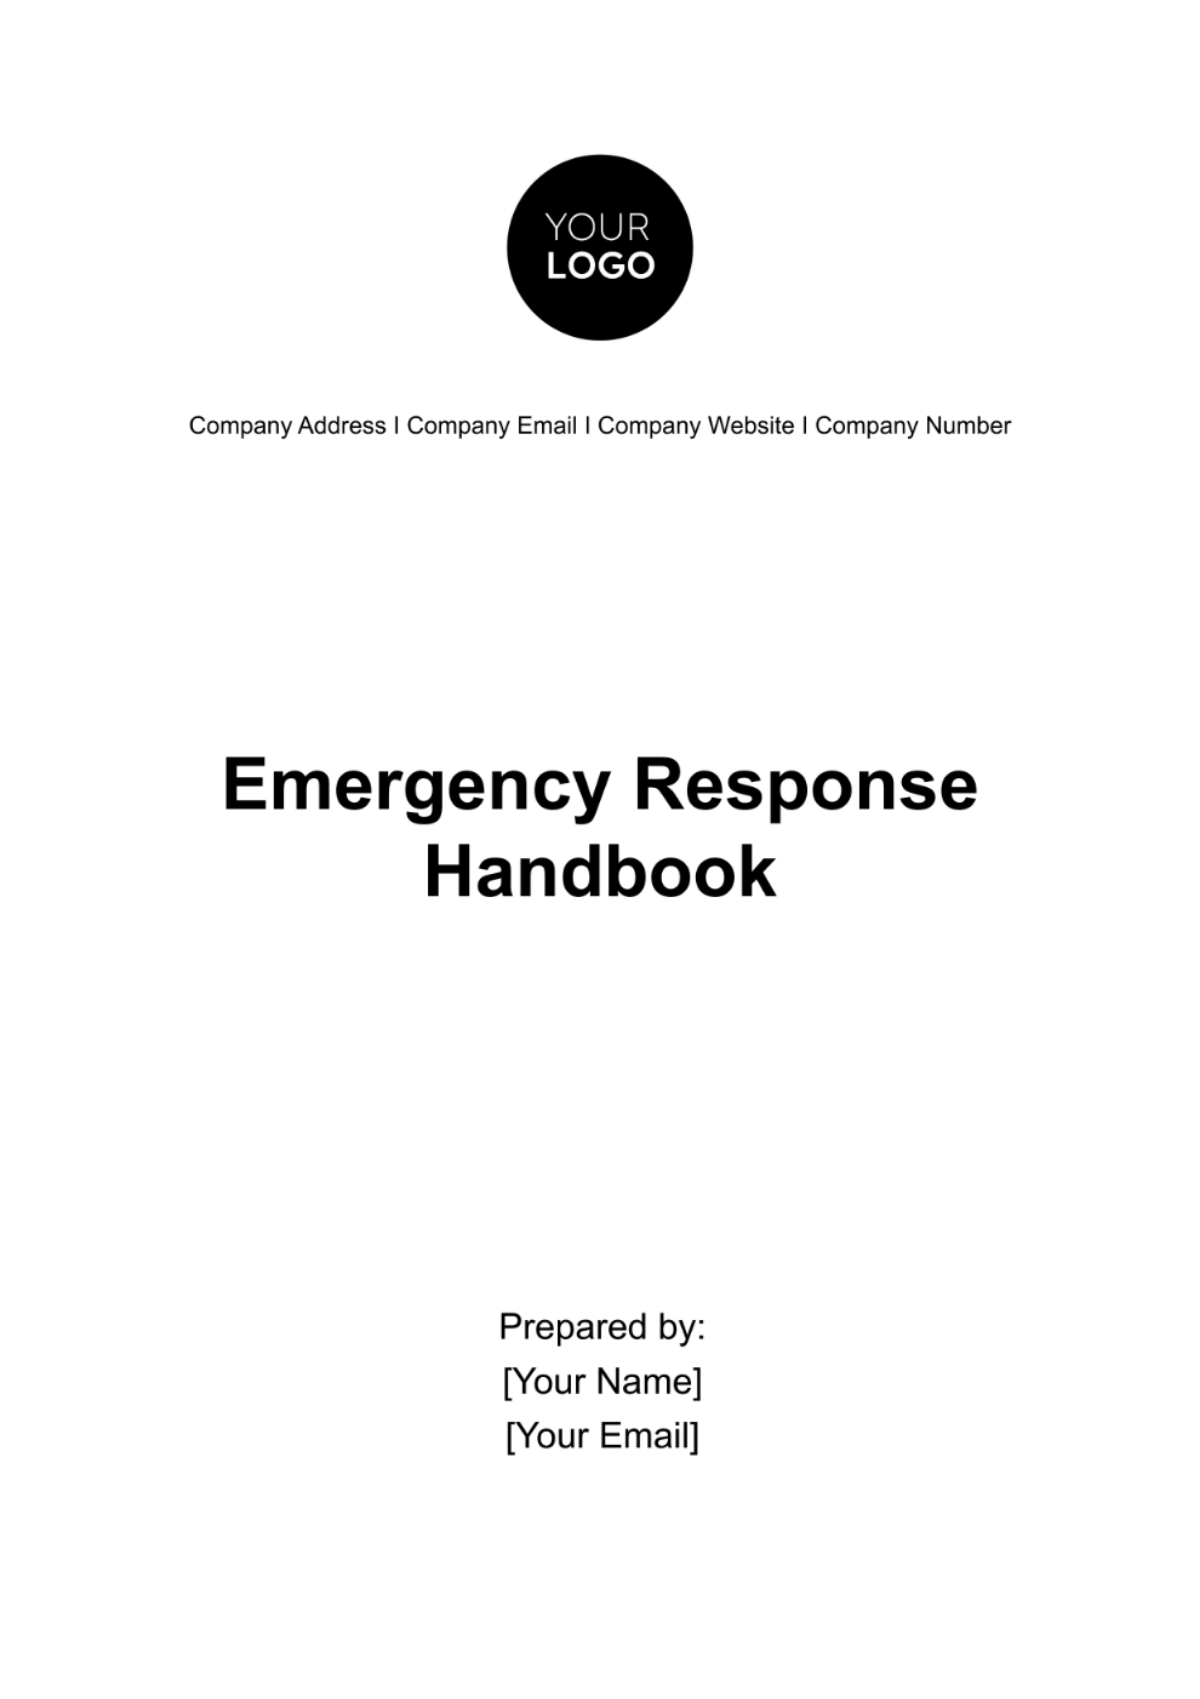 Emergency Response Handbook Template